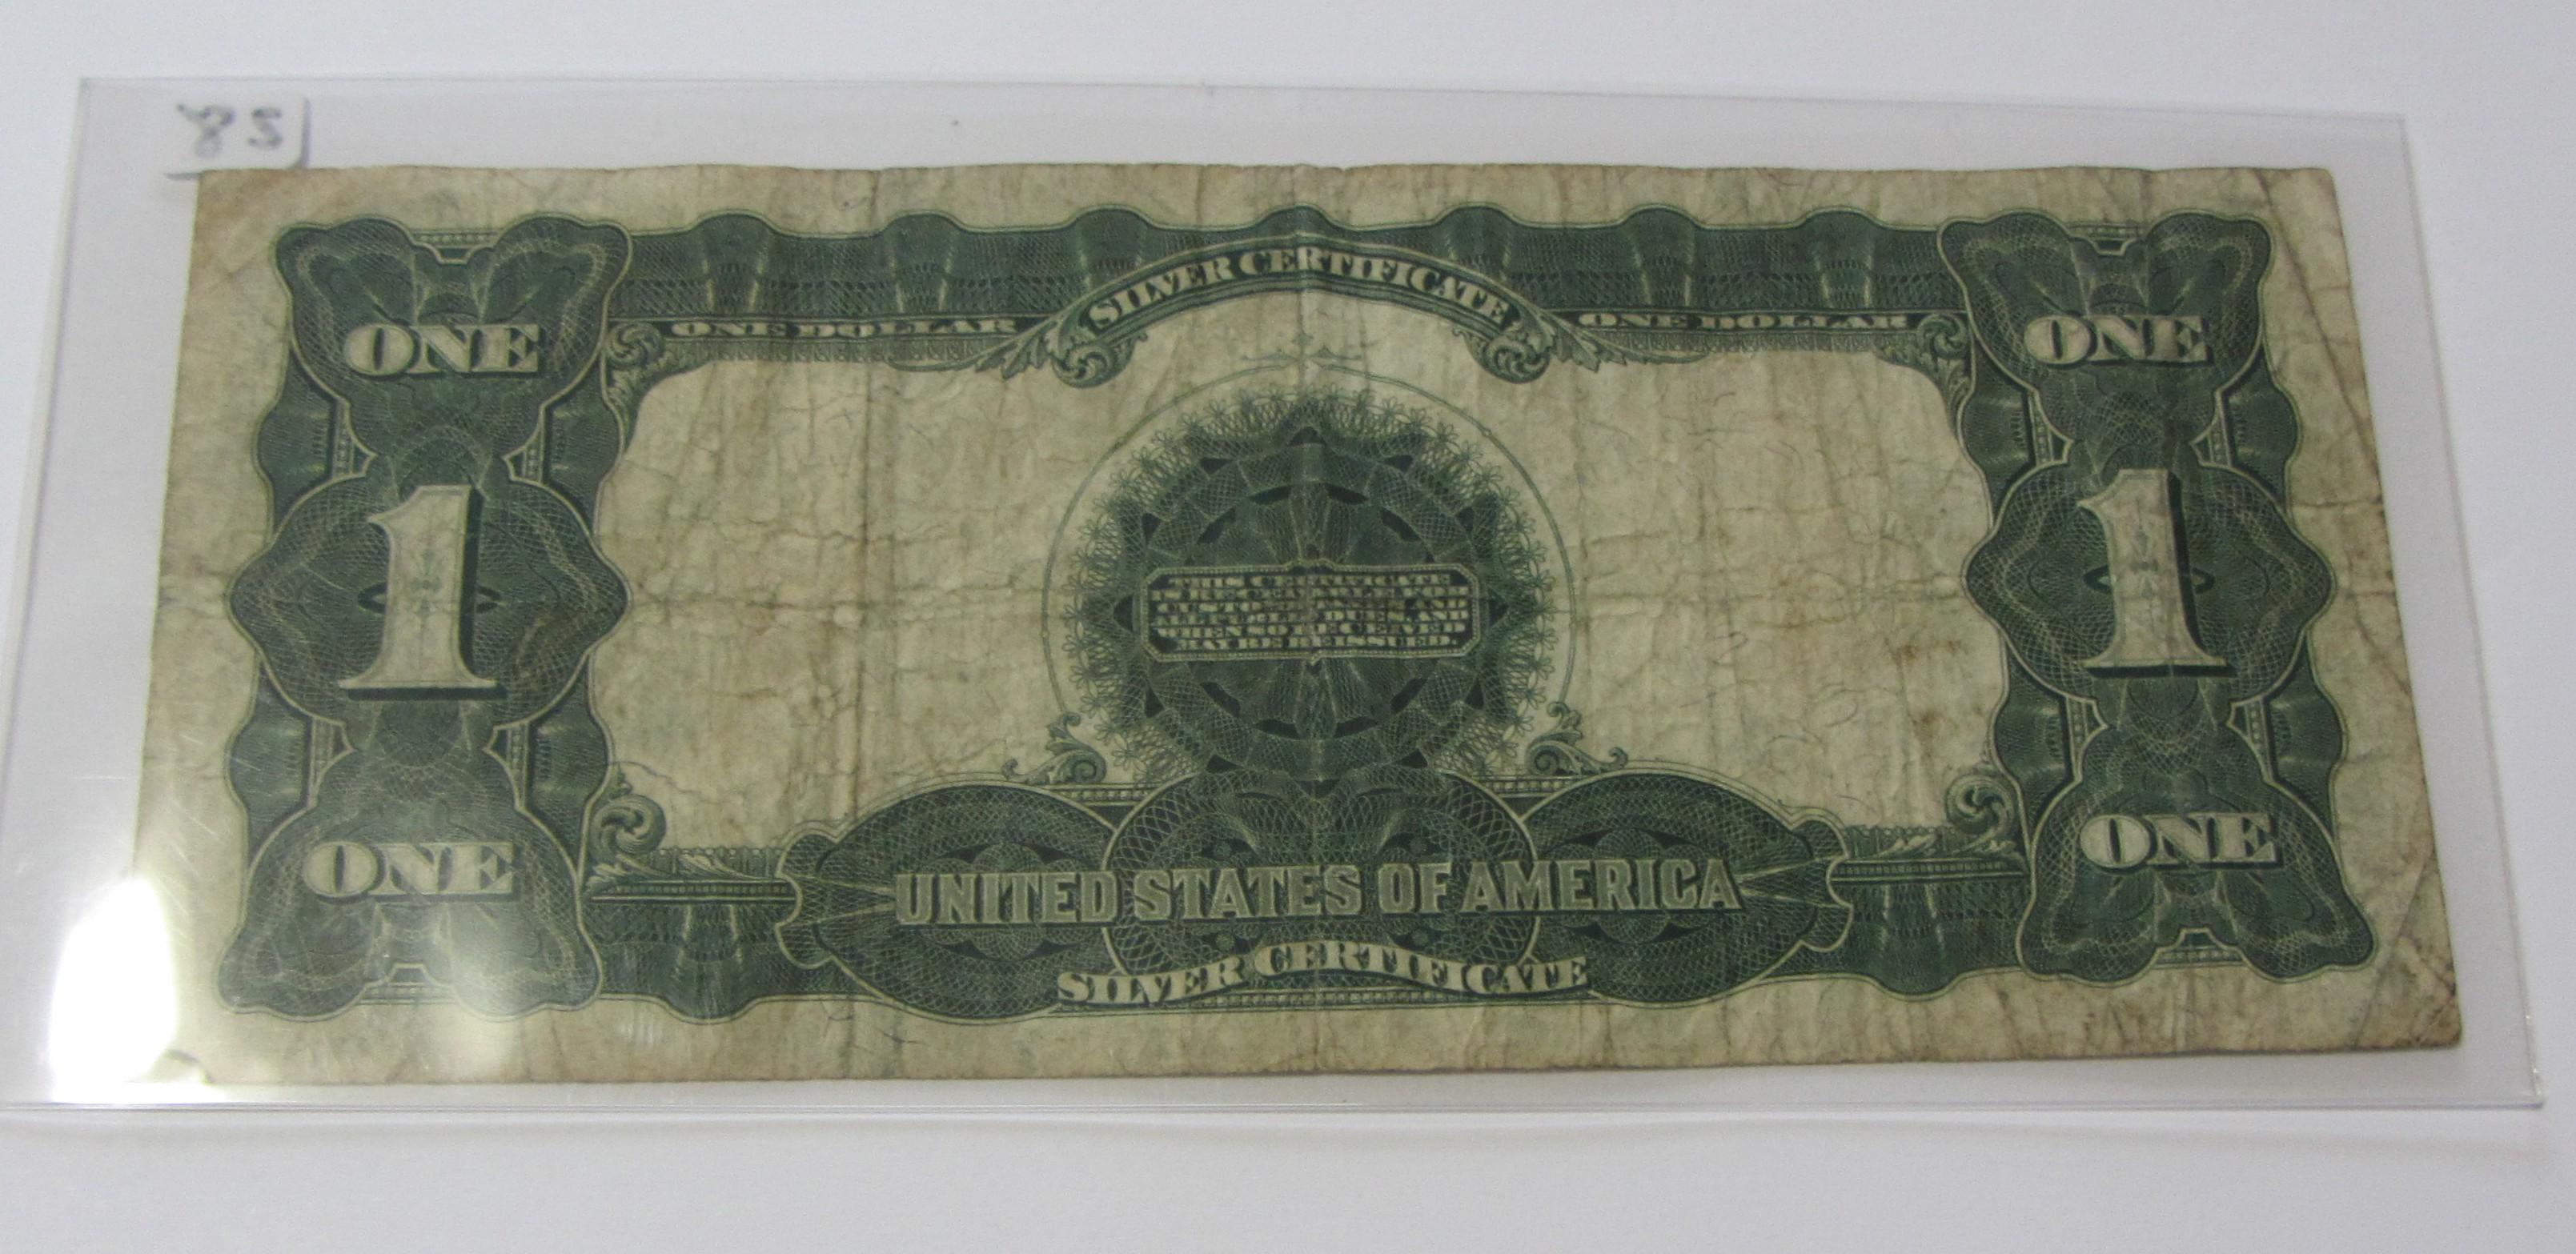 $1 1899 BLACK EAGLE SILVER CERTIFICATE